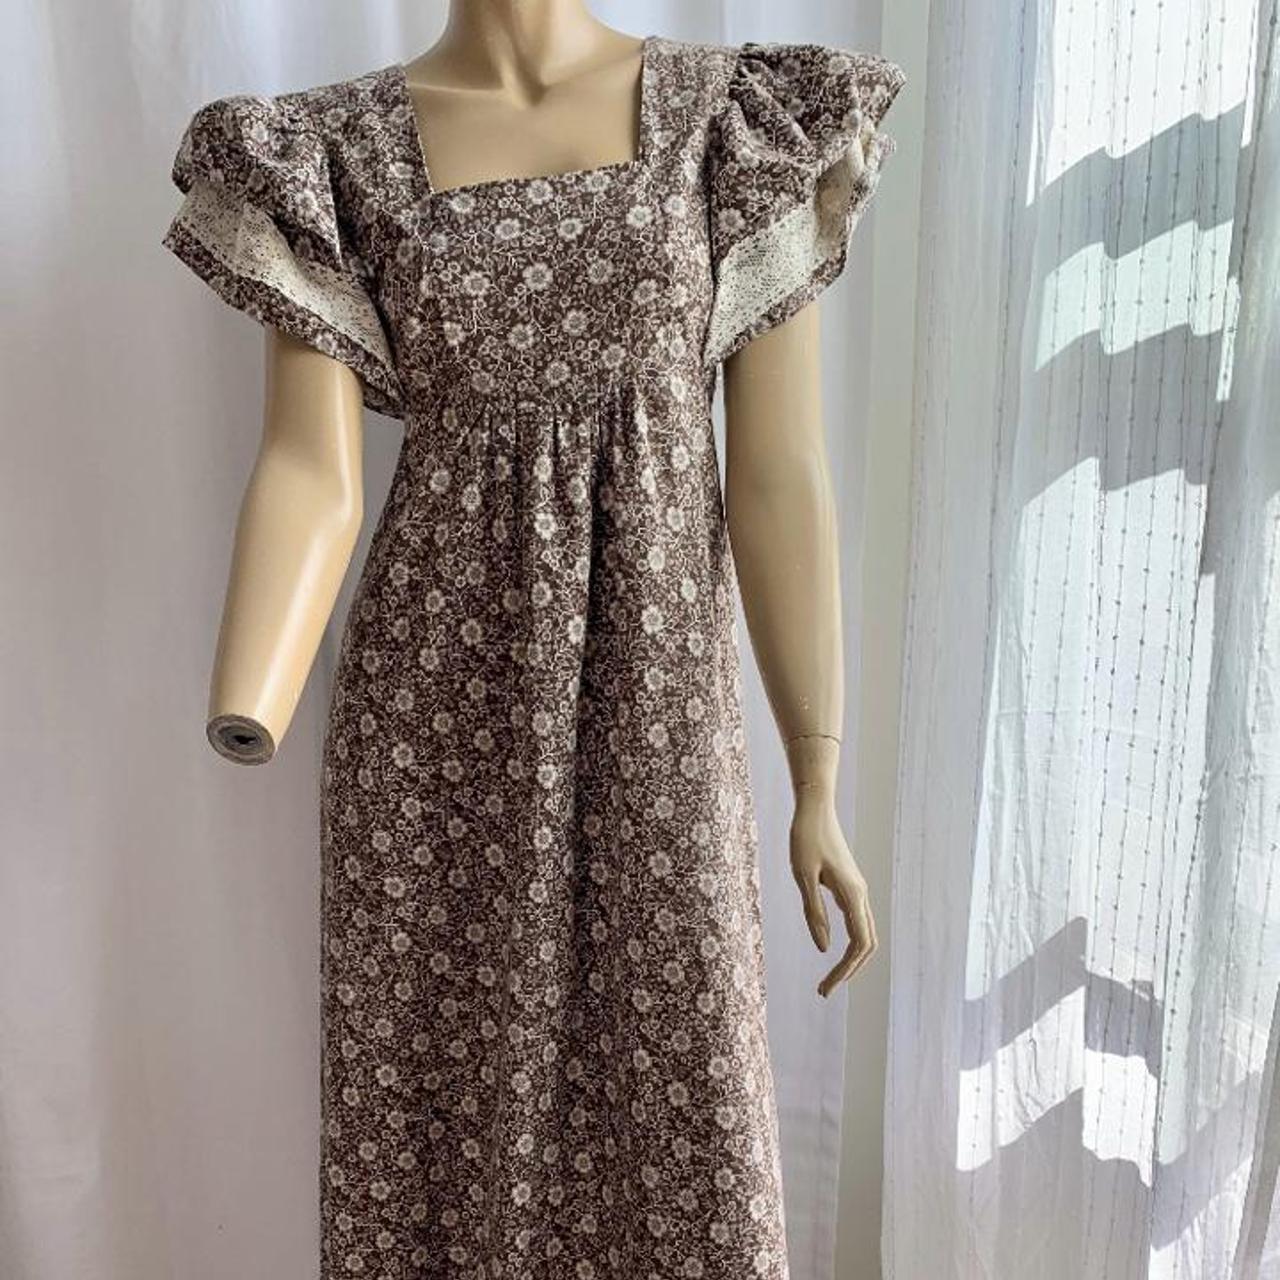 Product Image 1 - Vintage cotton brown calico dress!